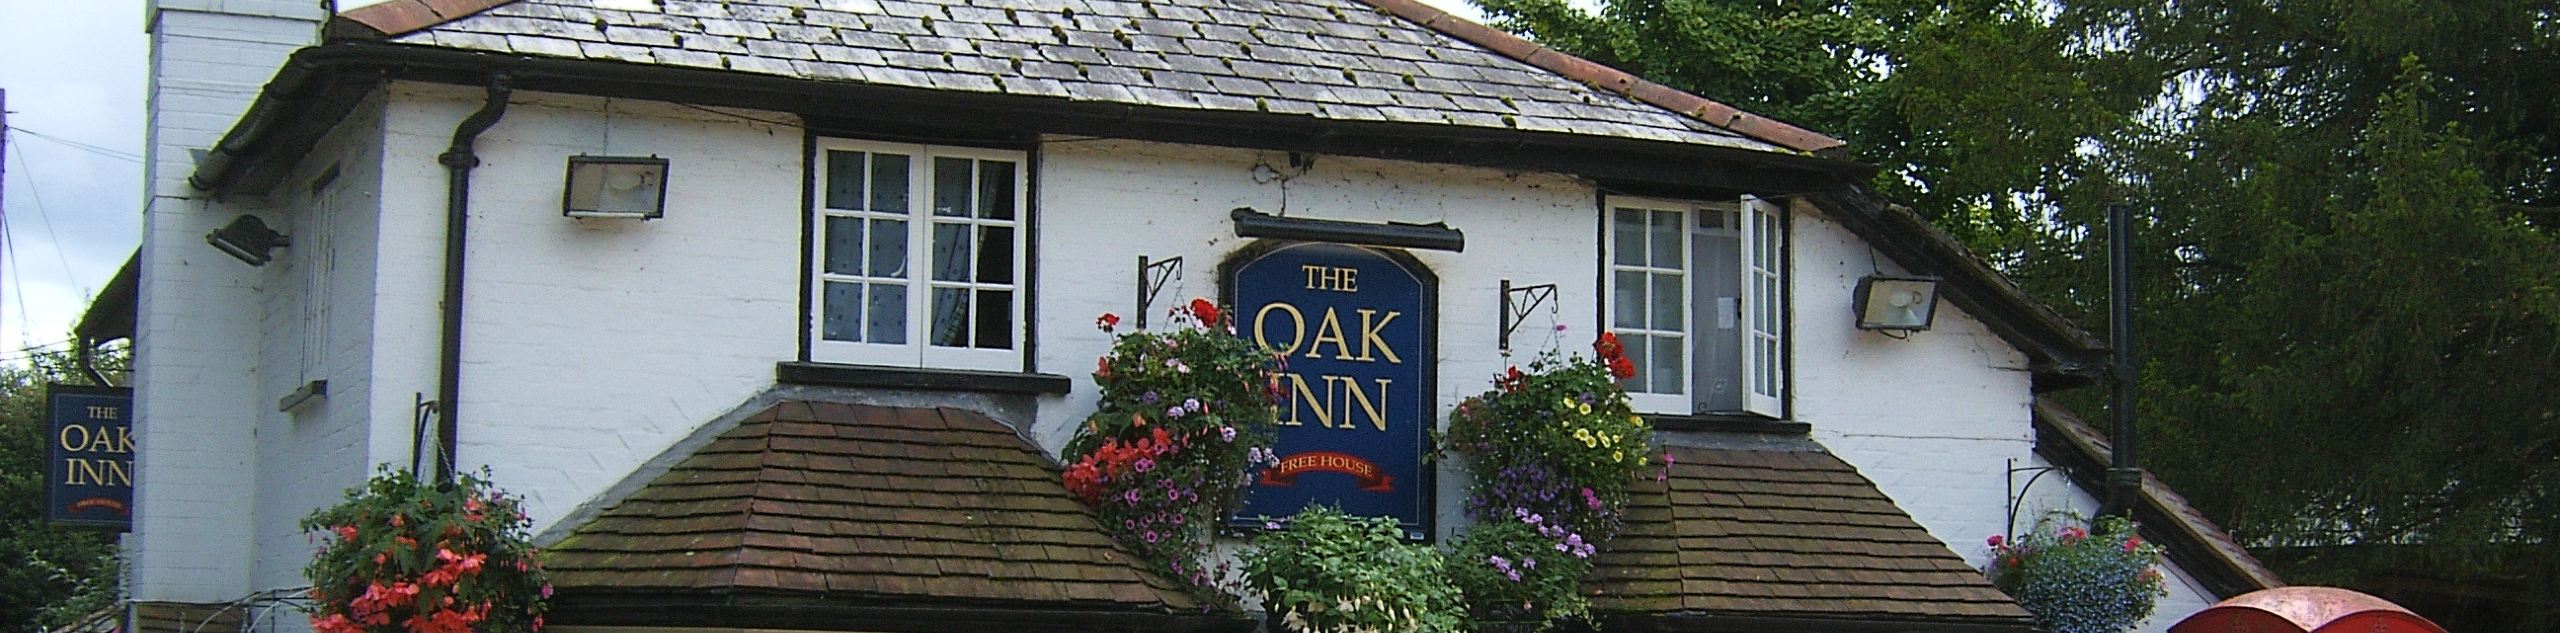 Oak Inn Pub to Brockenhurst Walk